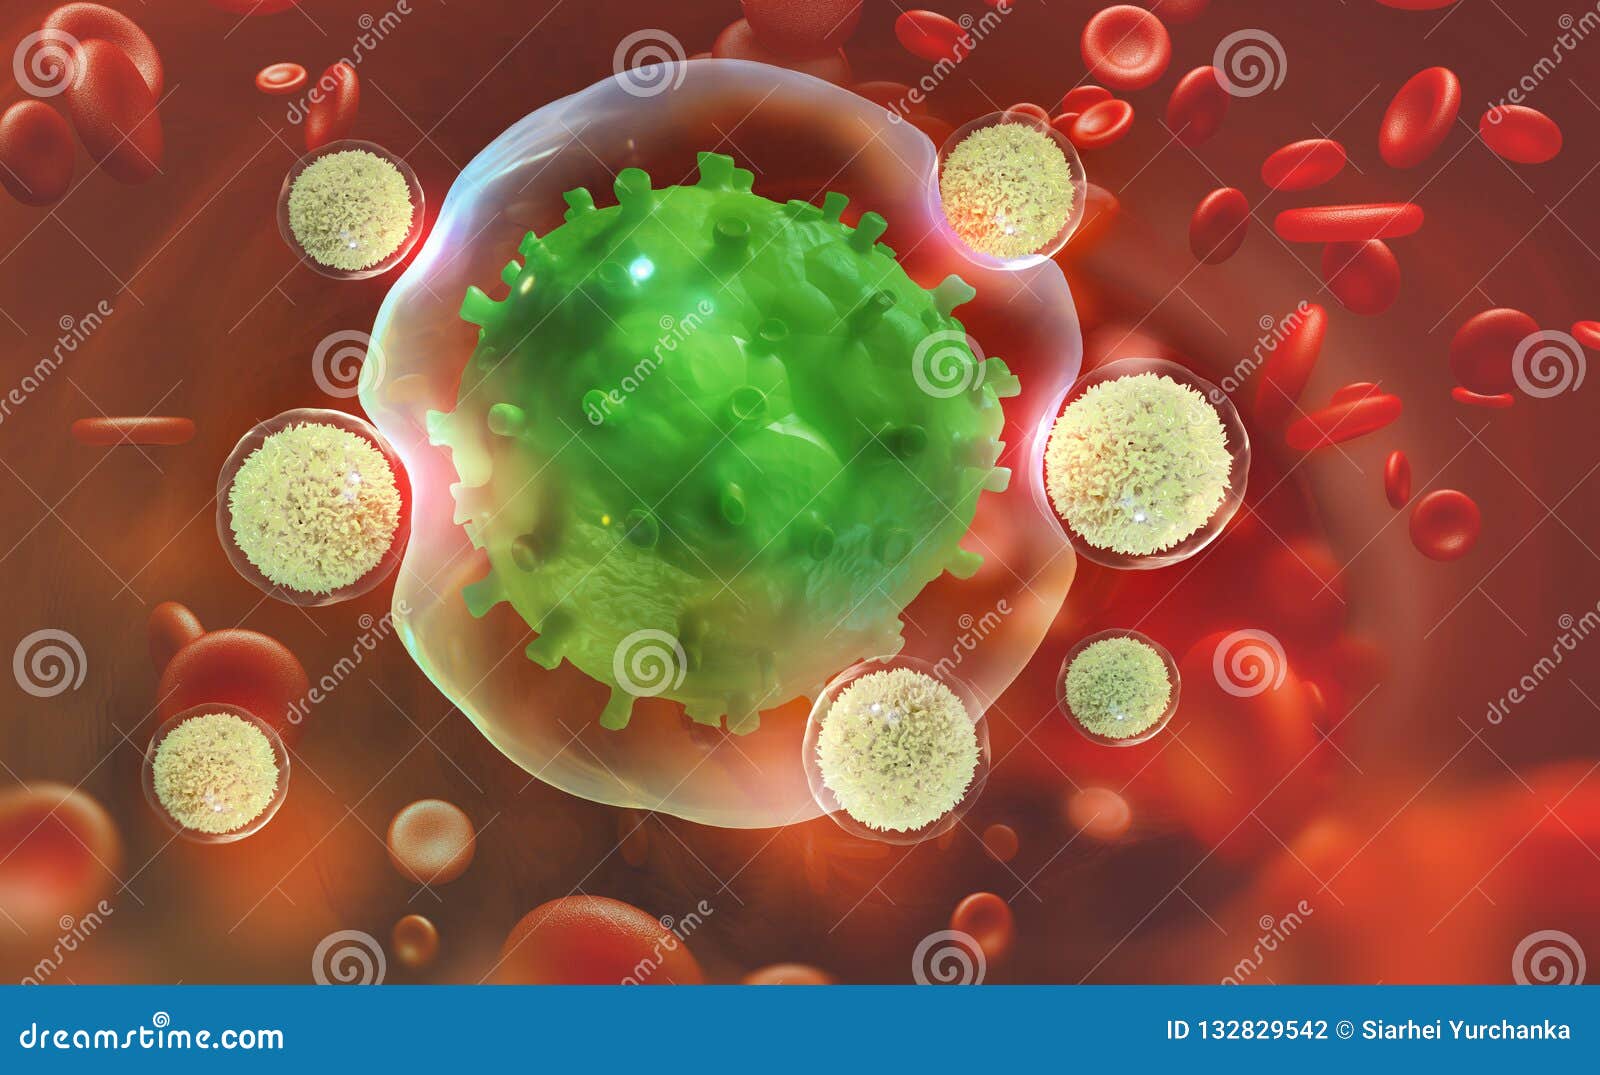 leukocytes attack the virus. immunity of the body